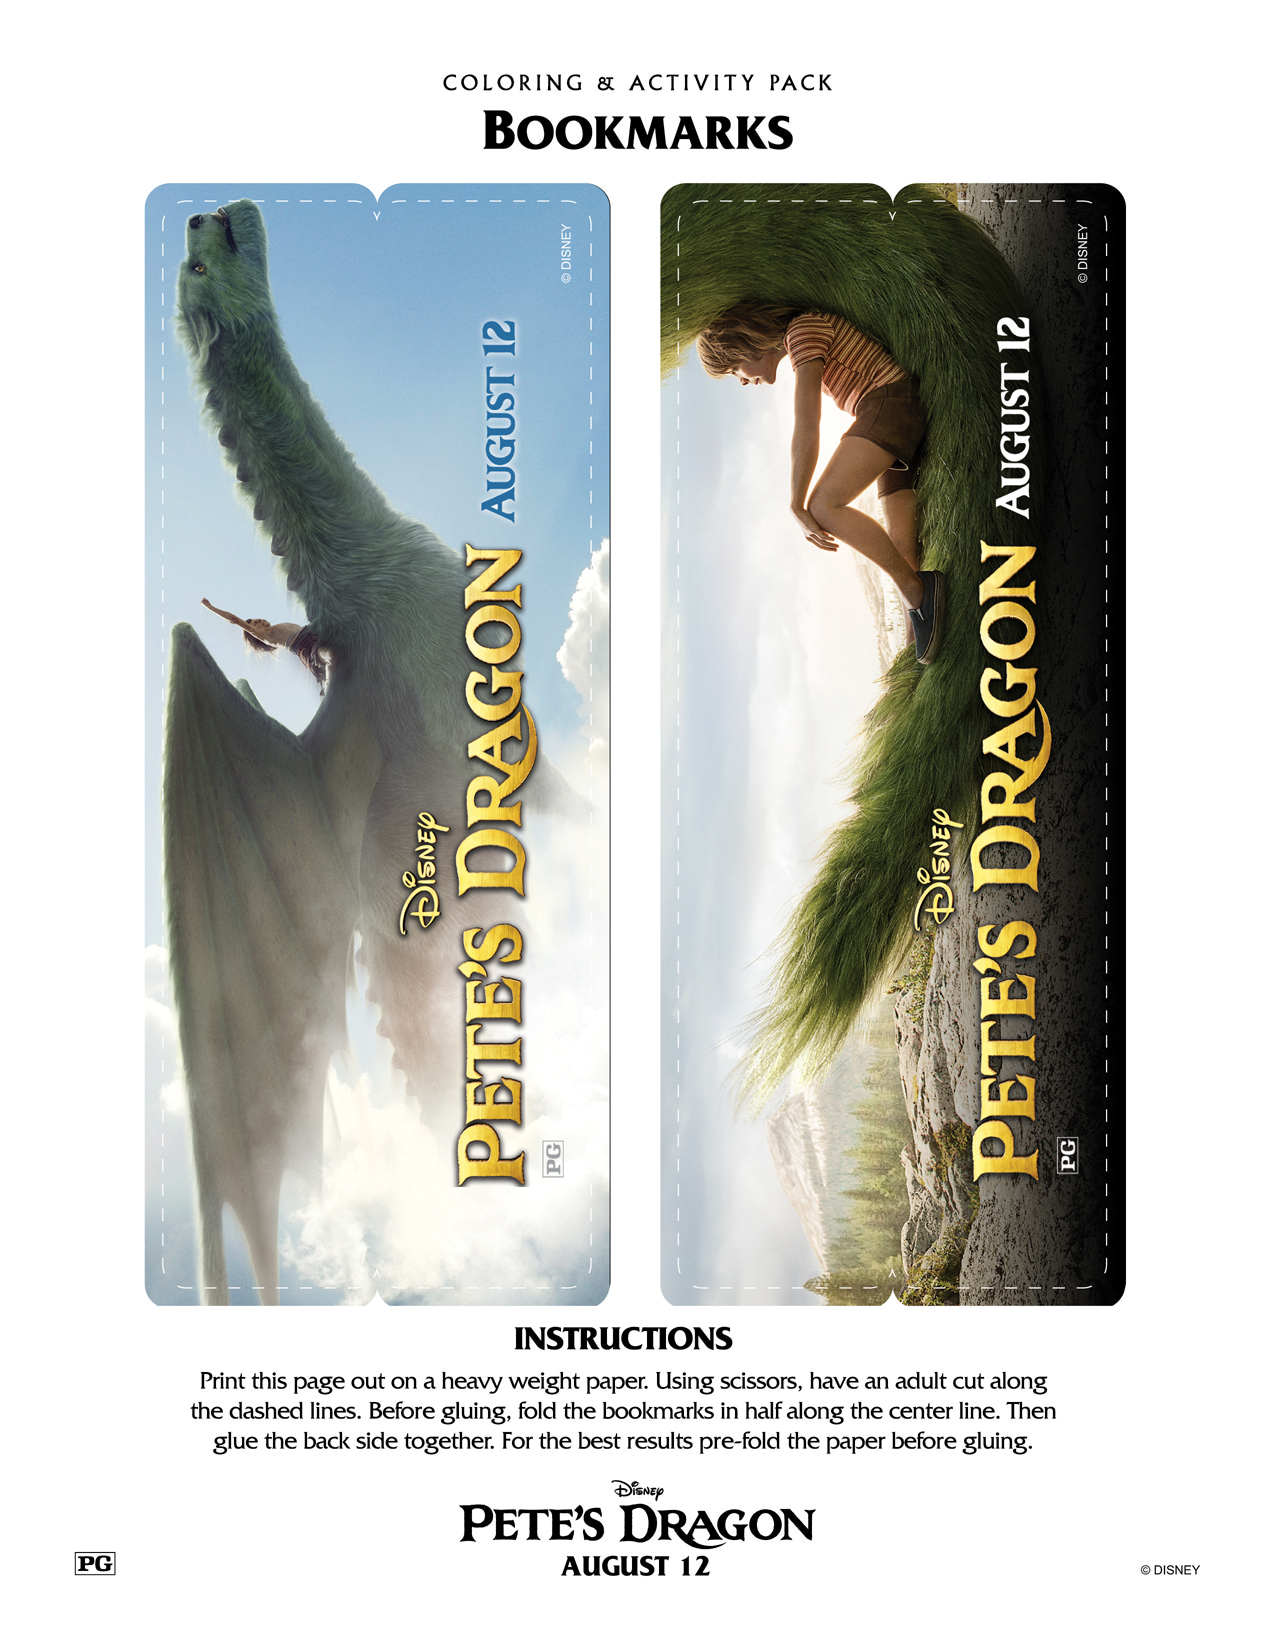 Pete's Dragon Bookmarks